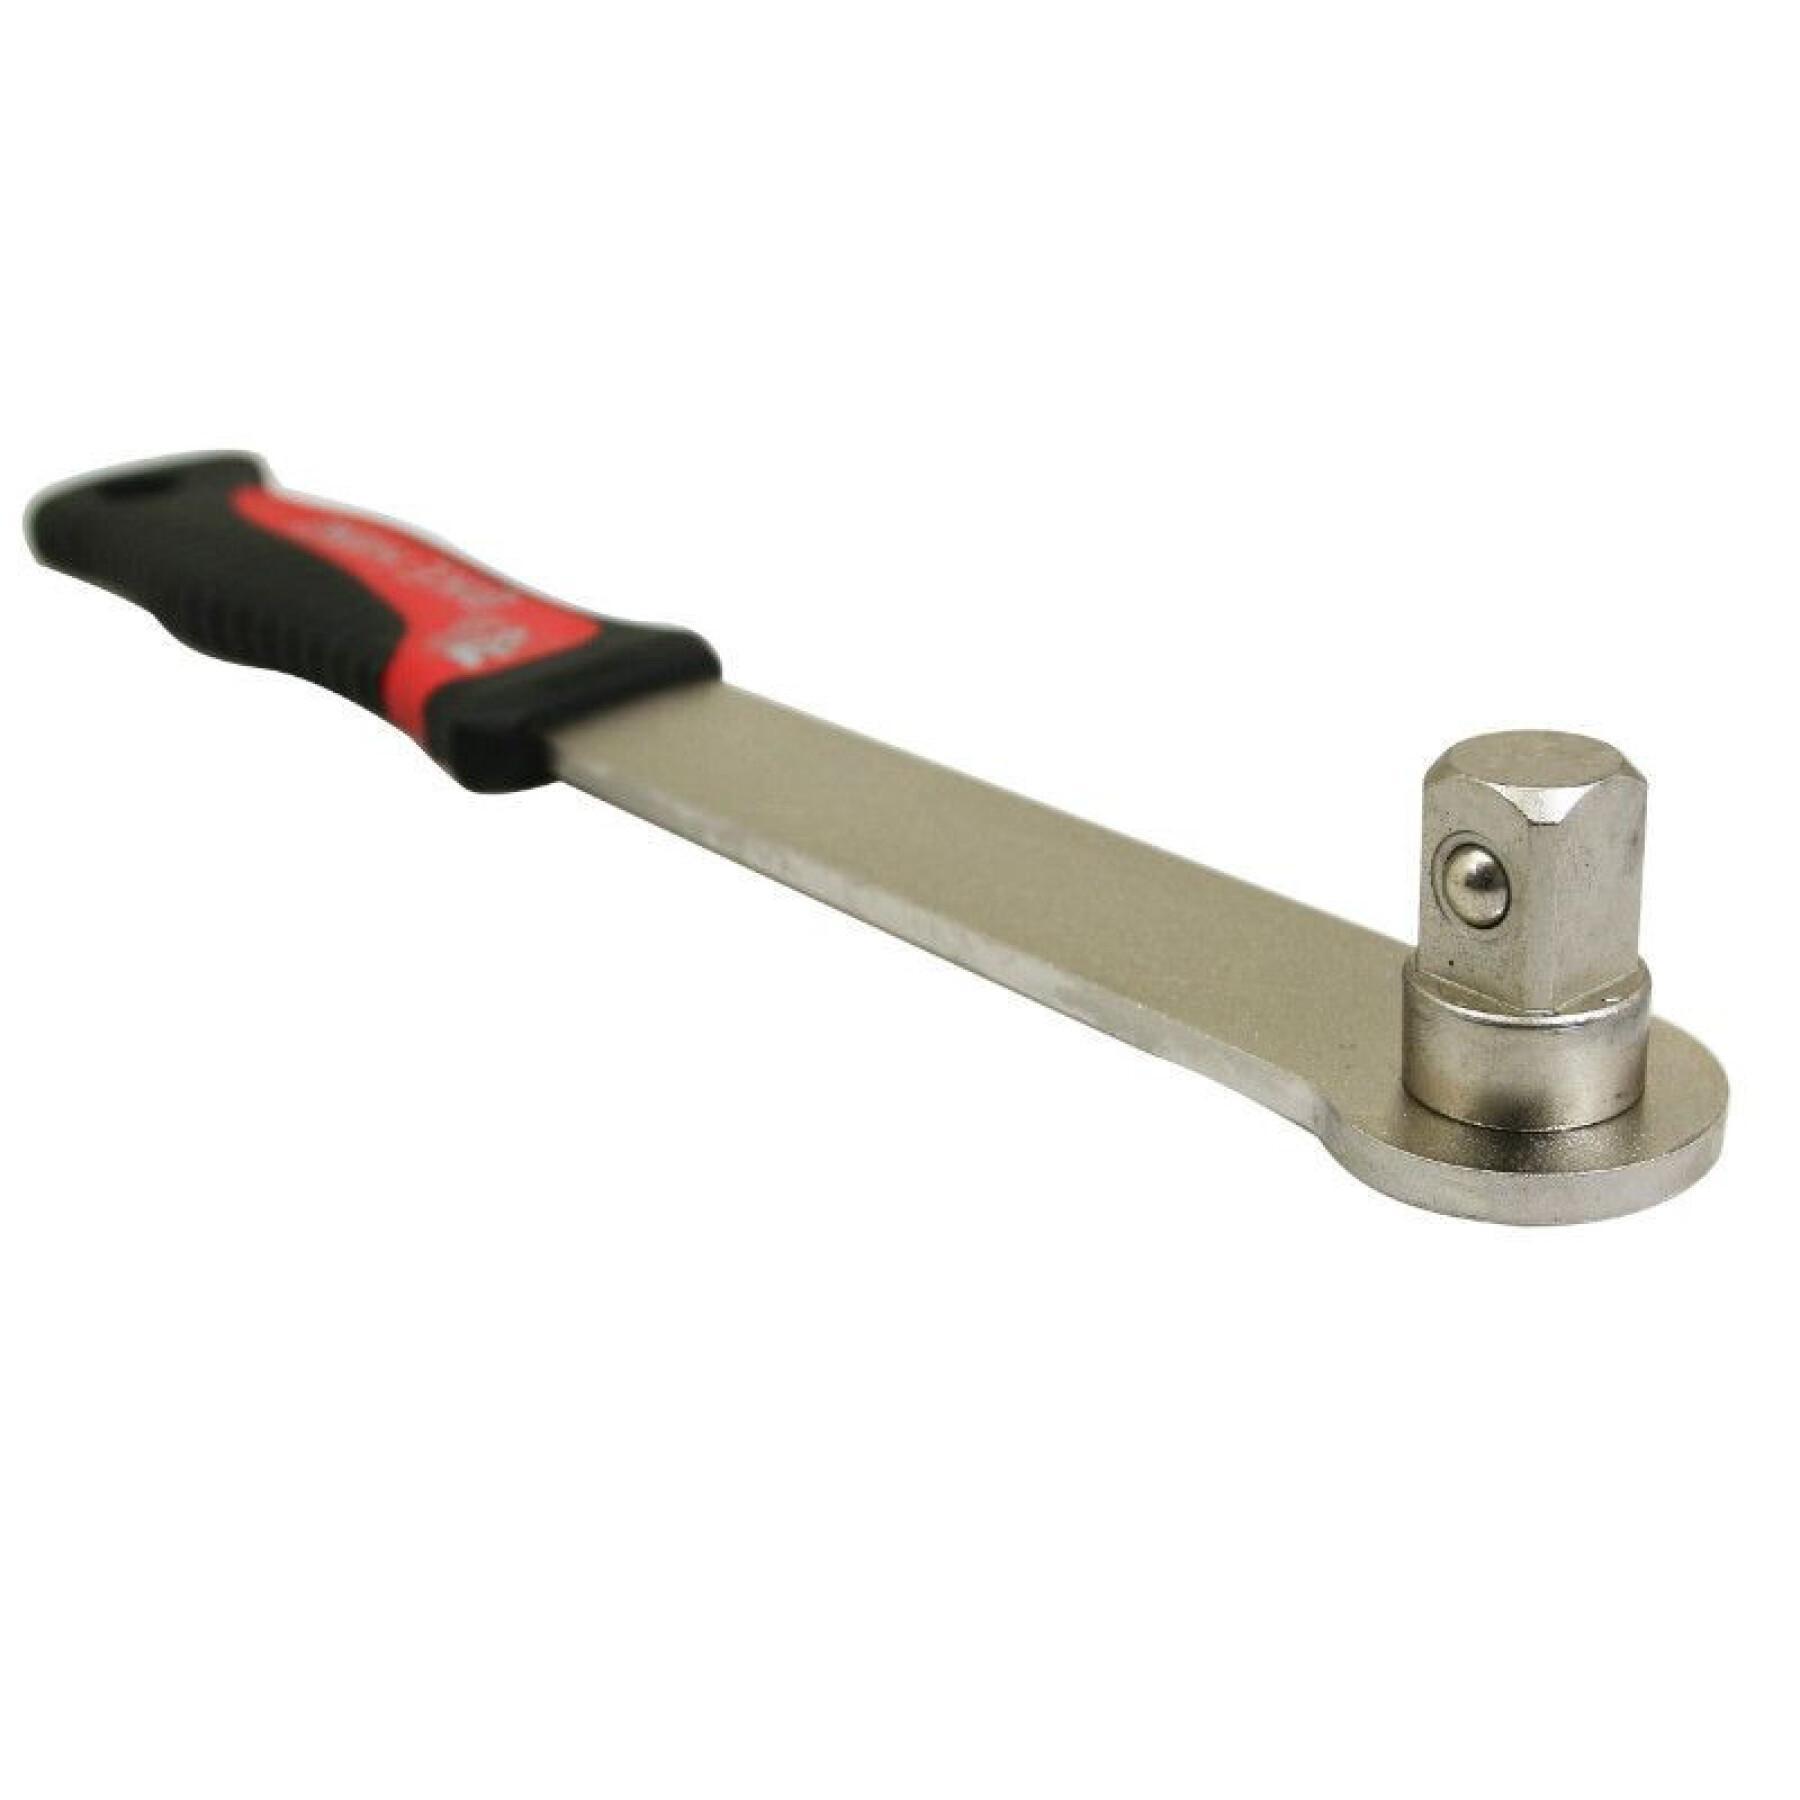 Nut wrench P2R Bosch Ref 148685-148686